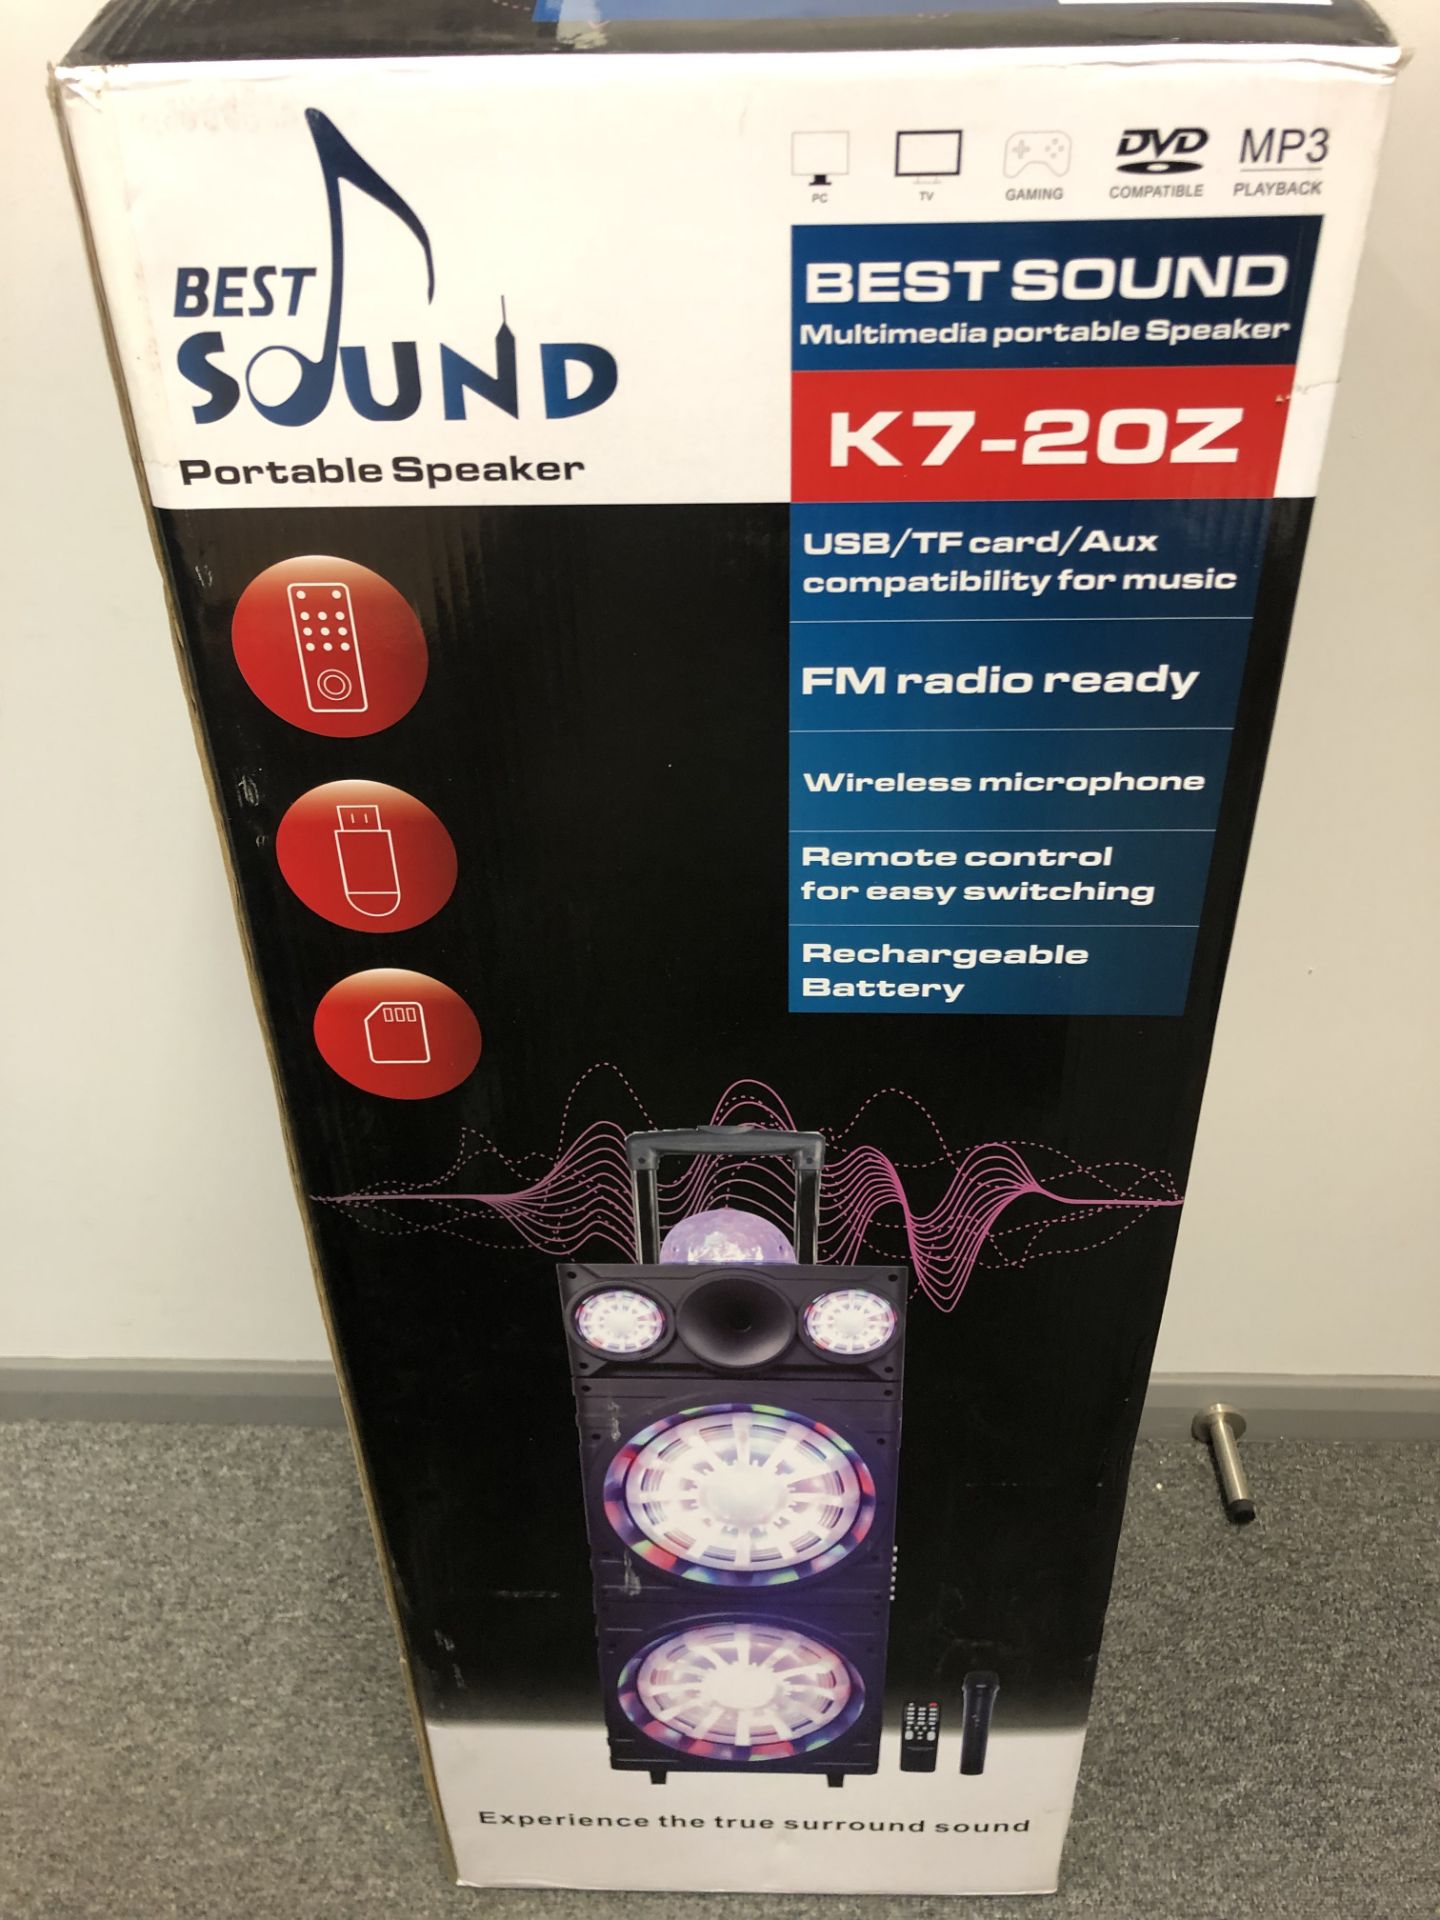 V Brand New Huge 102cm Best Sound Portable Multimedia Blutooth Speaker & Entertainment System Inc